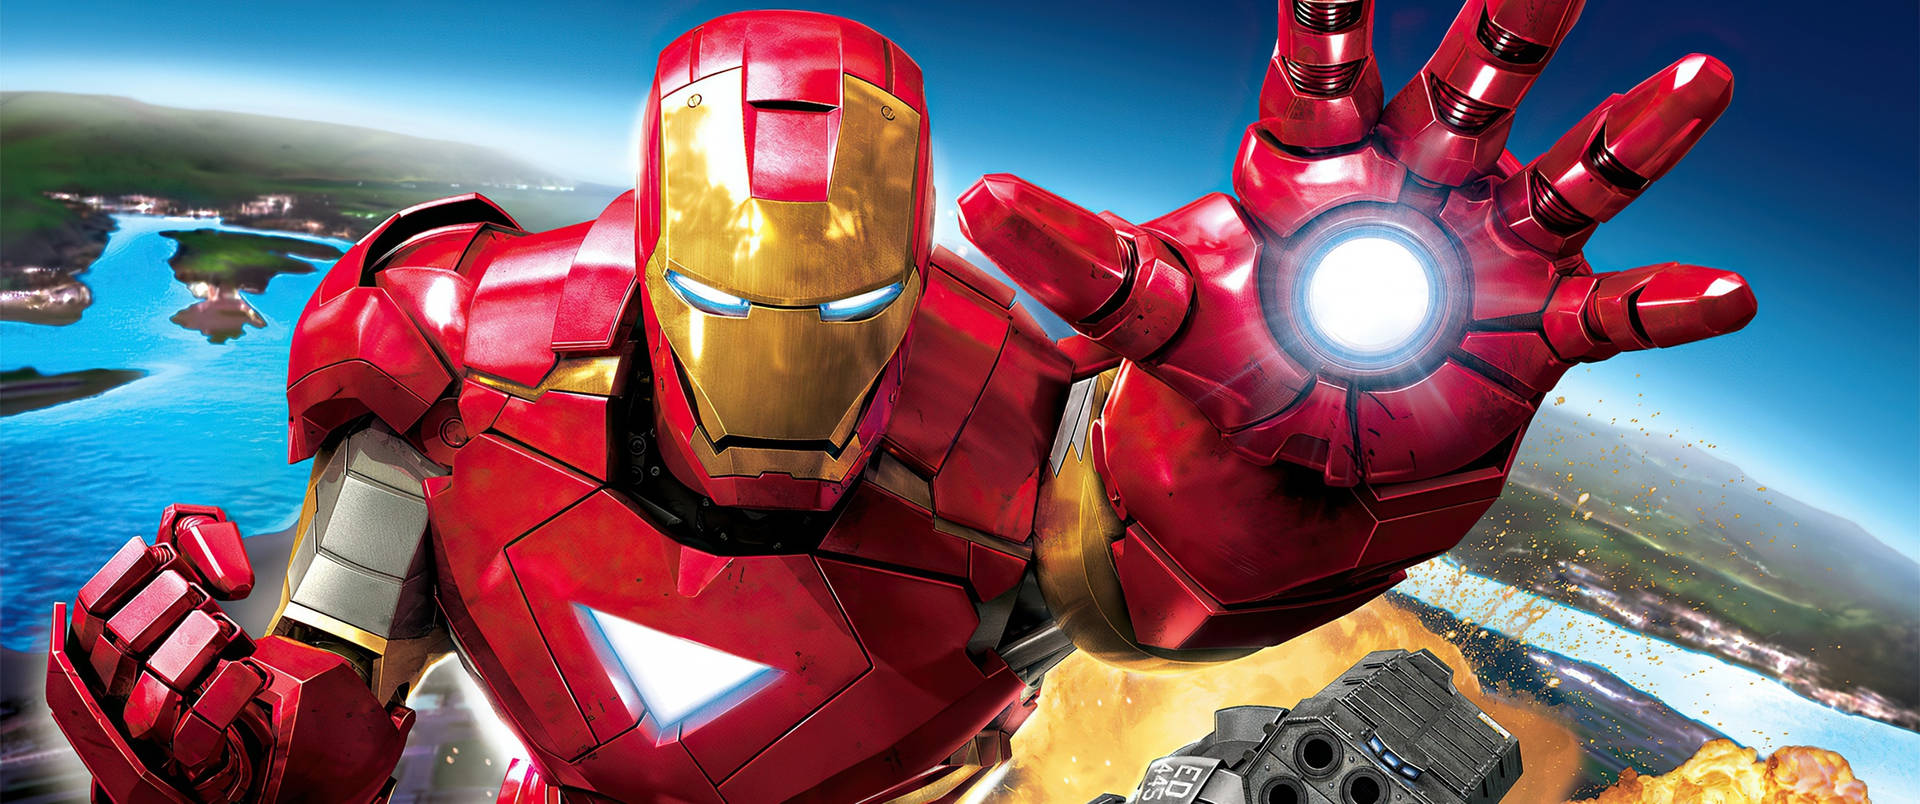 Iron Man Superhero 2010 Film Wallpaper